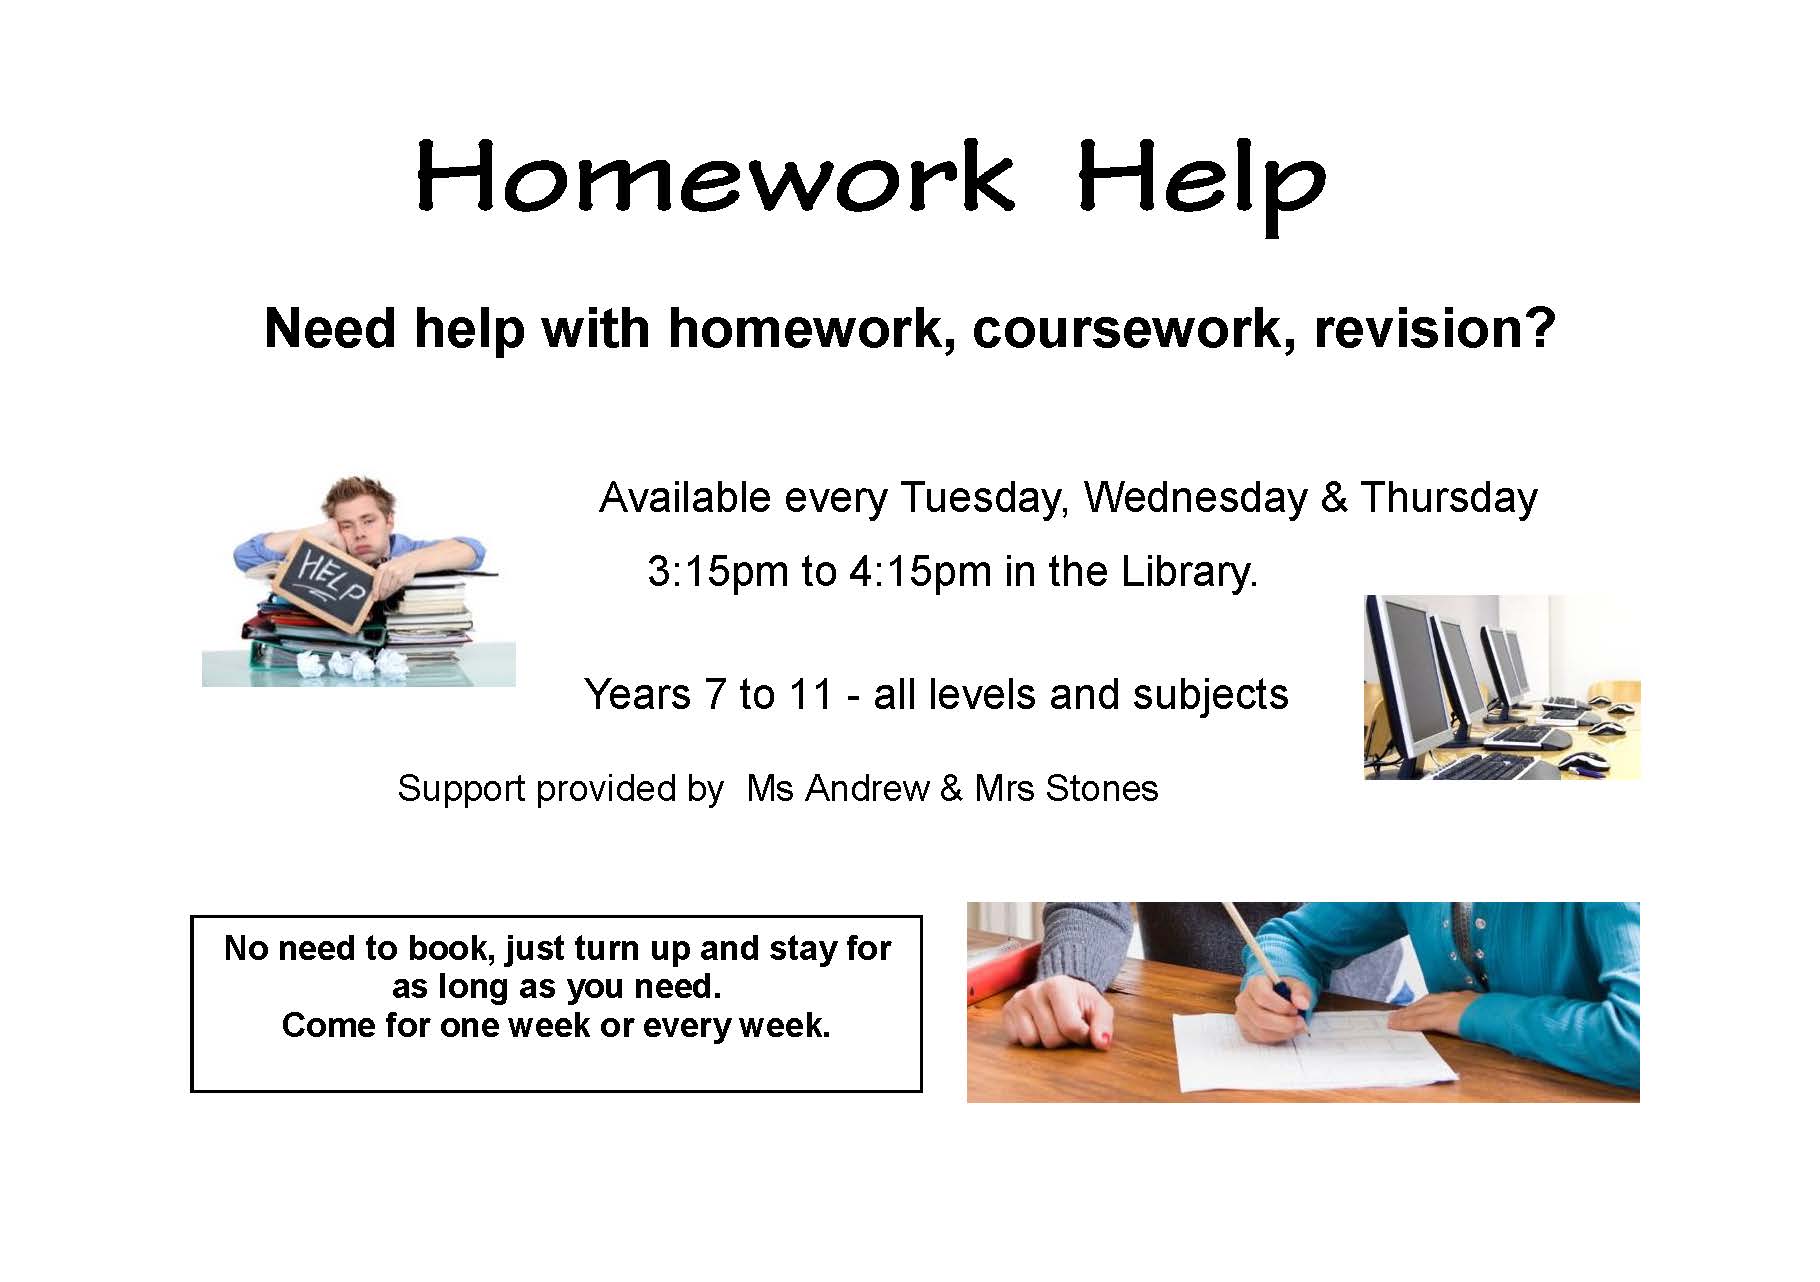 For homework help